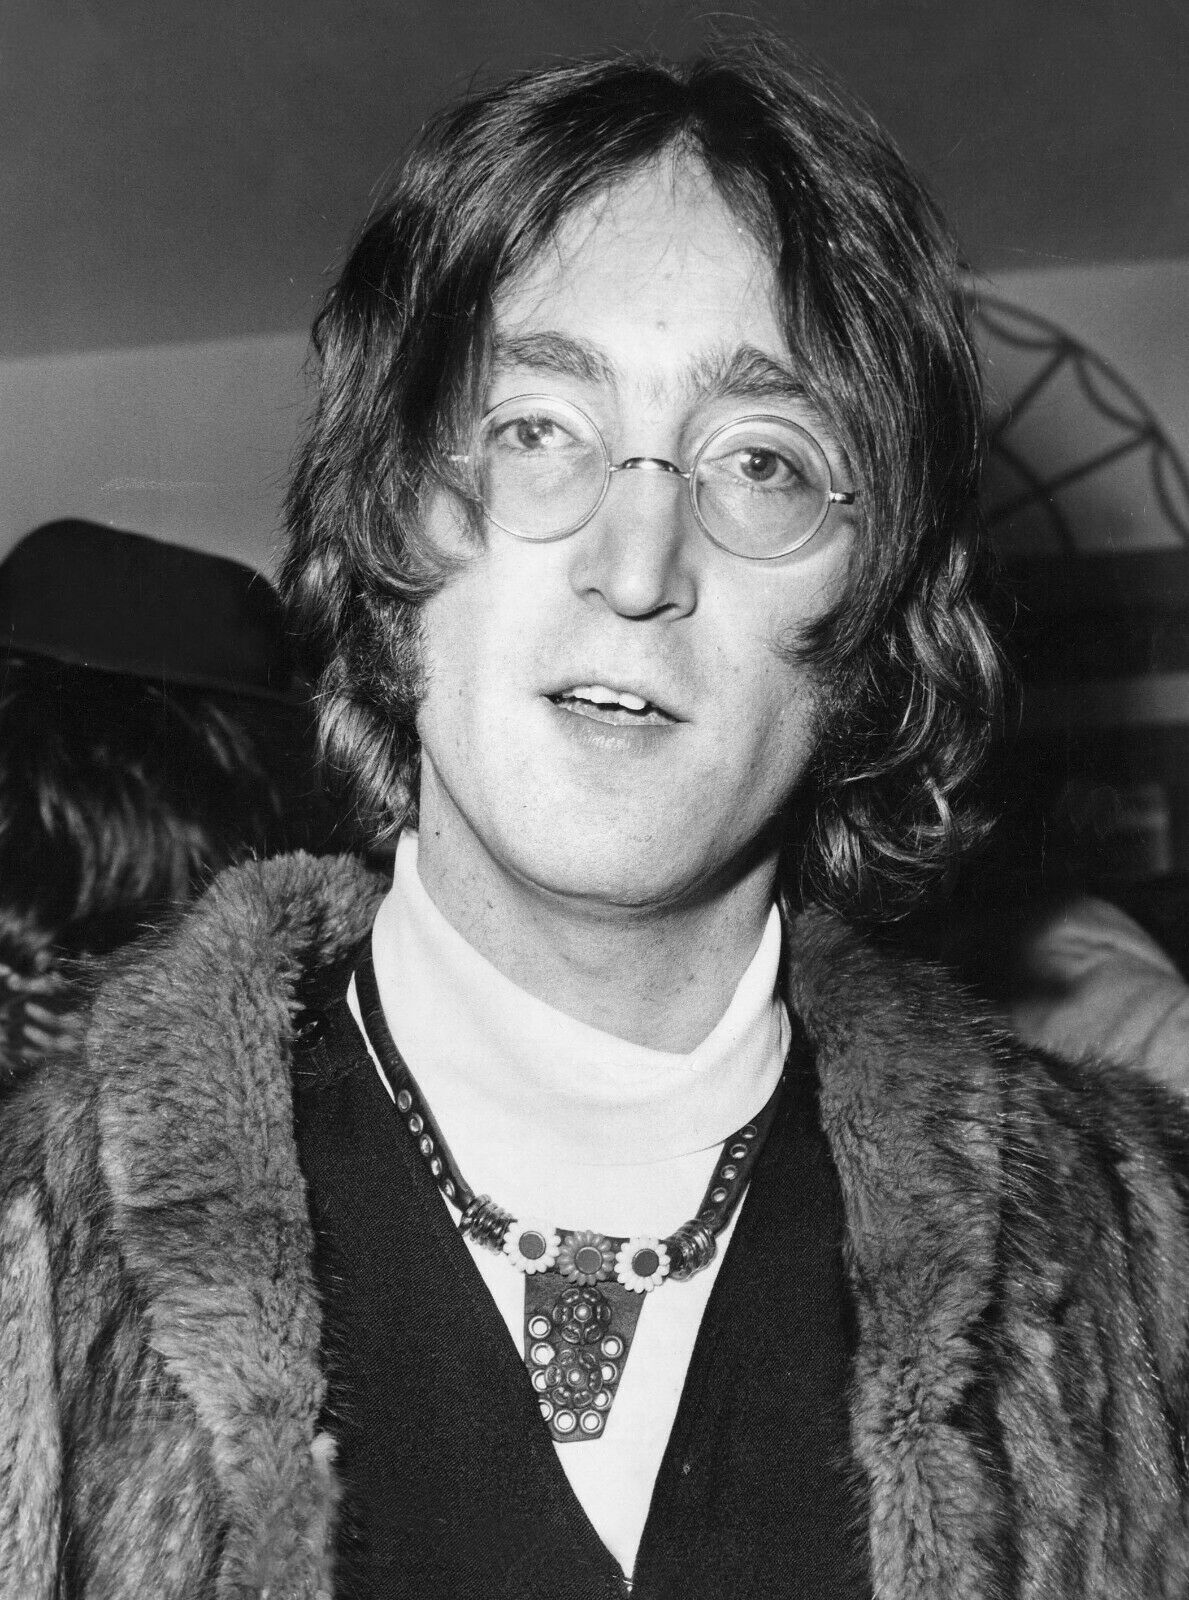 The Beatles - Music Photo #e-33 - John Lennon